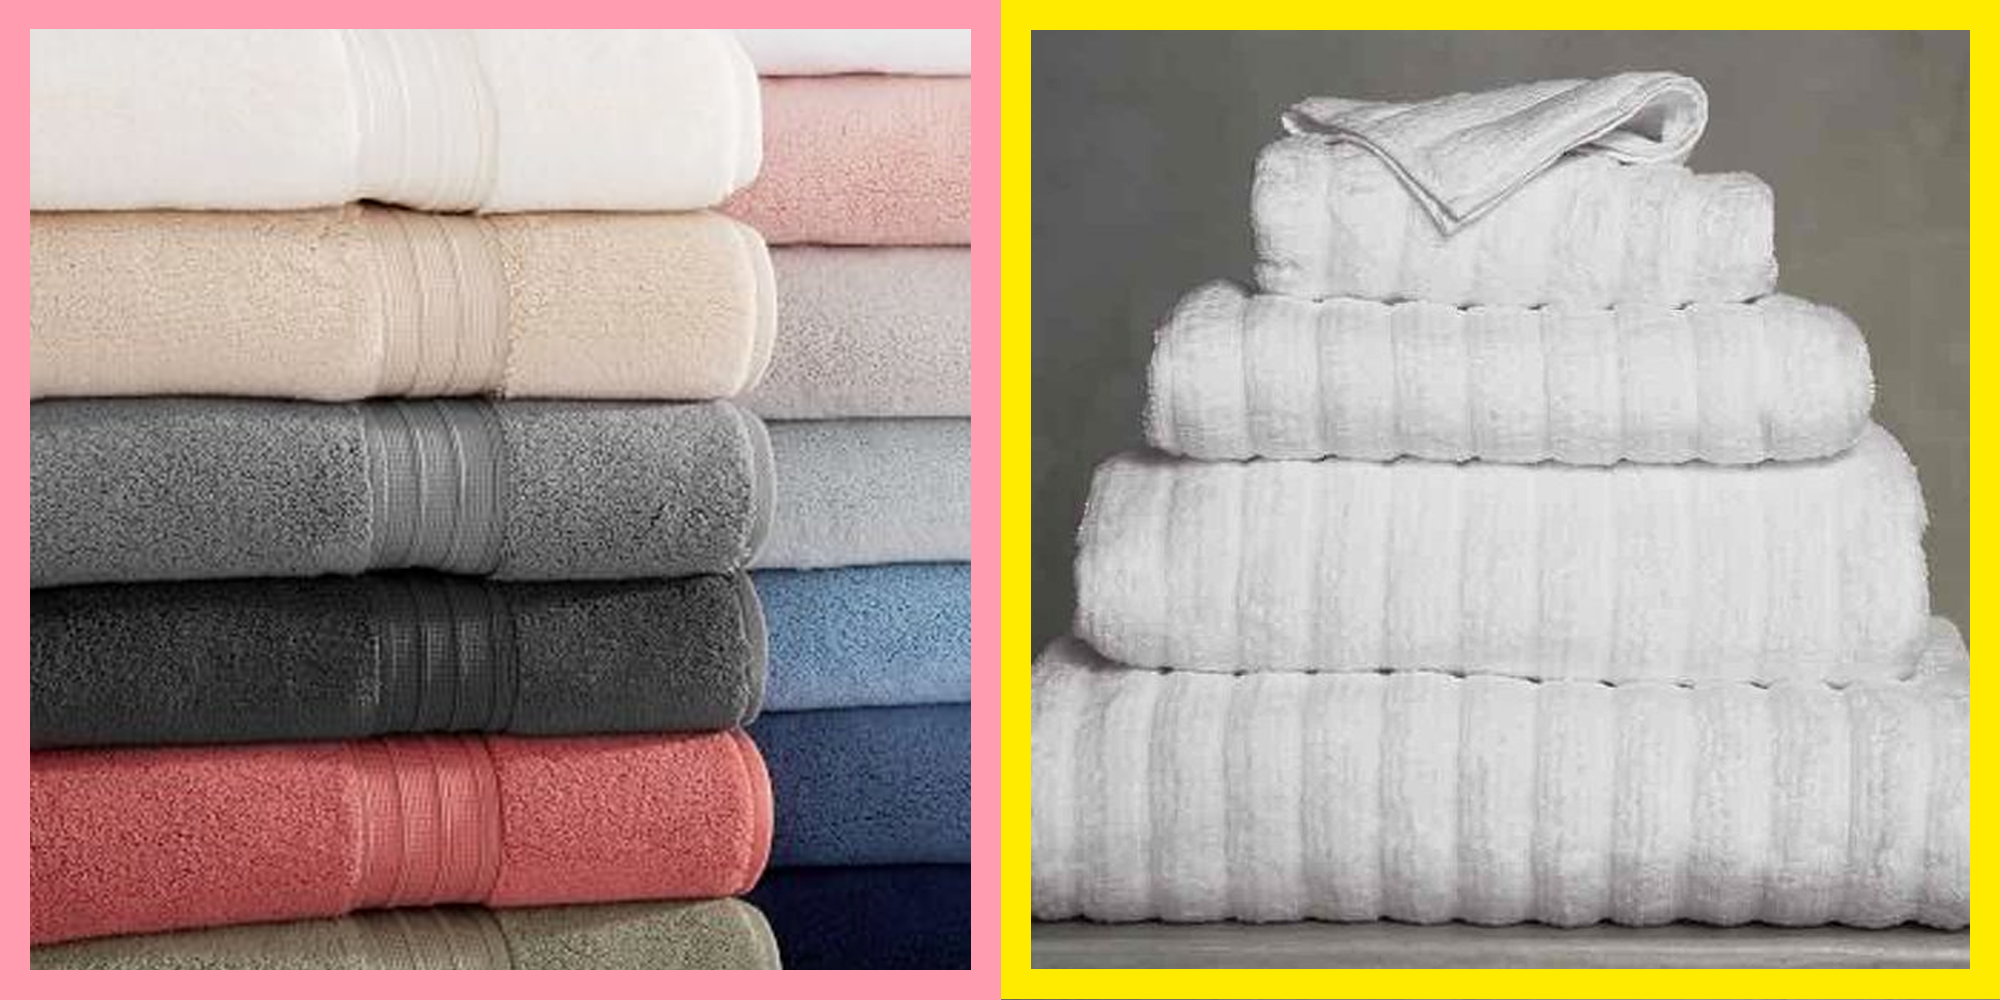 15 Best Bath Towels 2020